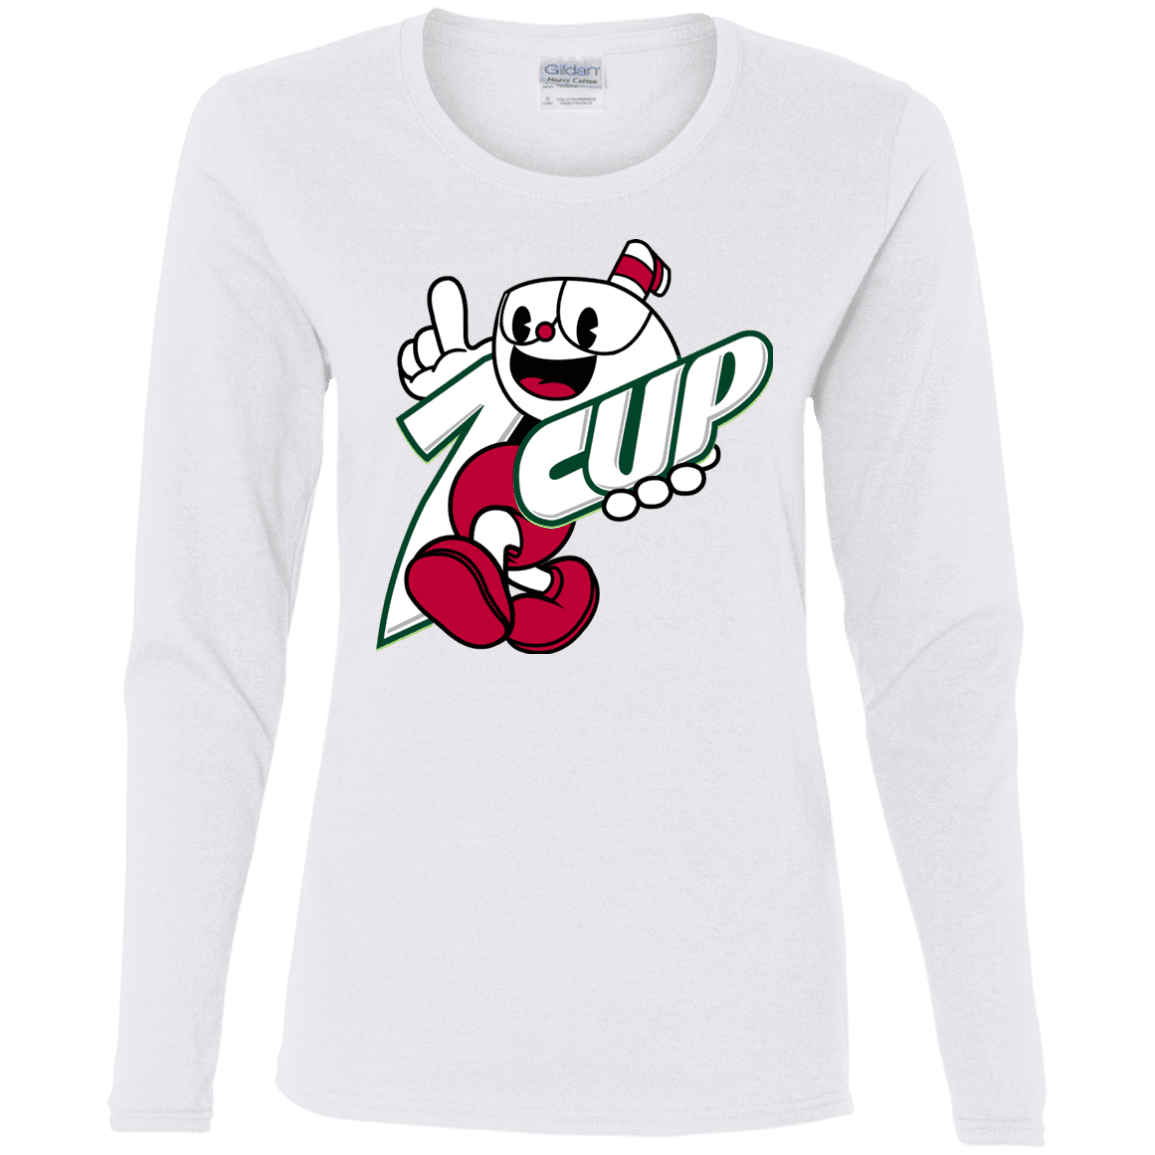 T-Shirts White / S 1cup Women's Long Sleeve T-Shirt